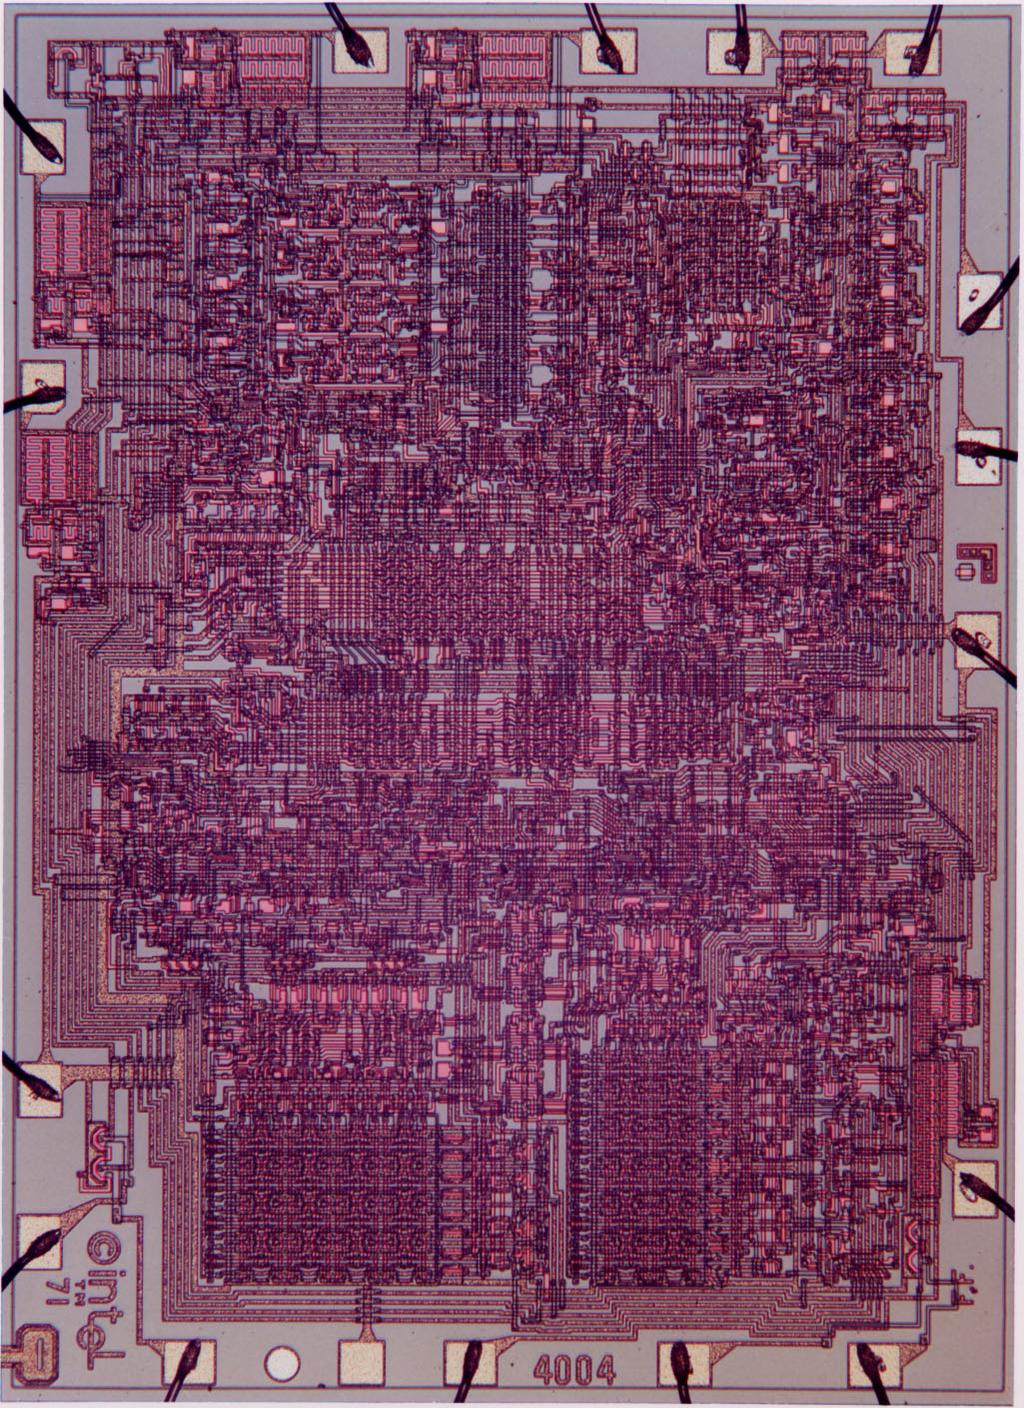 1971 Intel 4004 Microprocessor